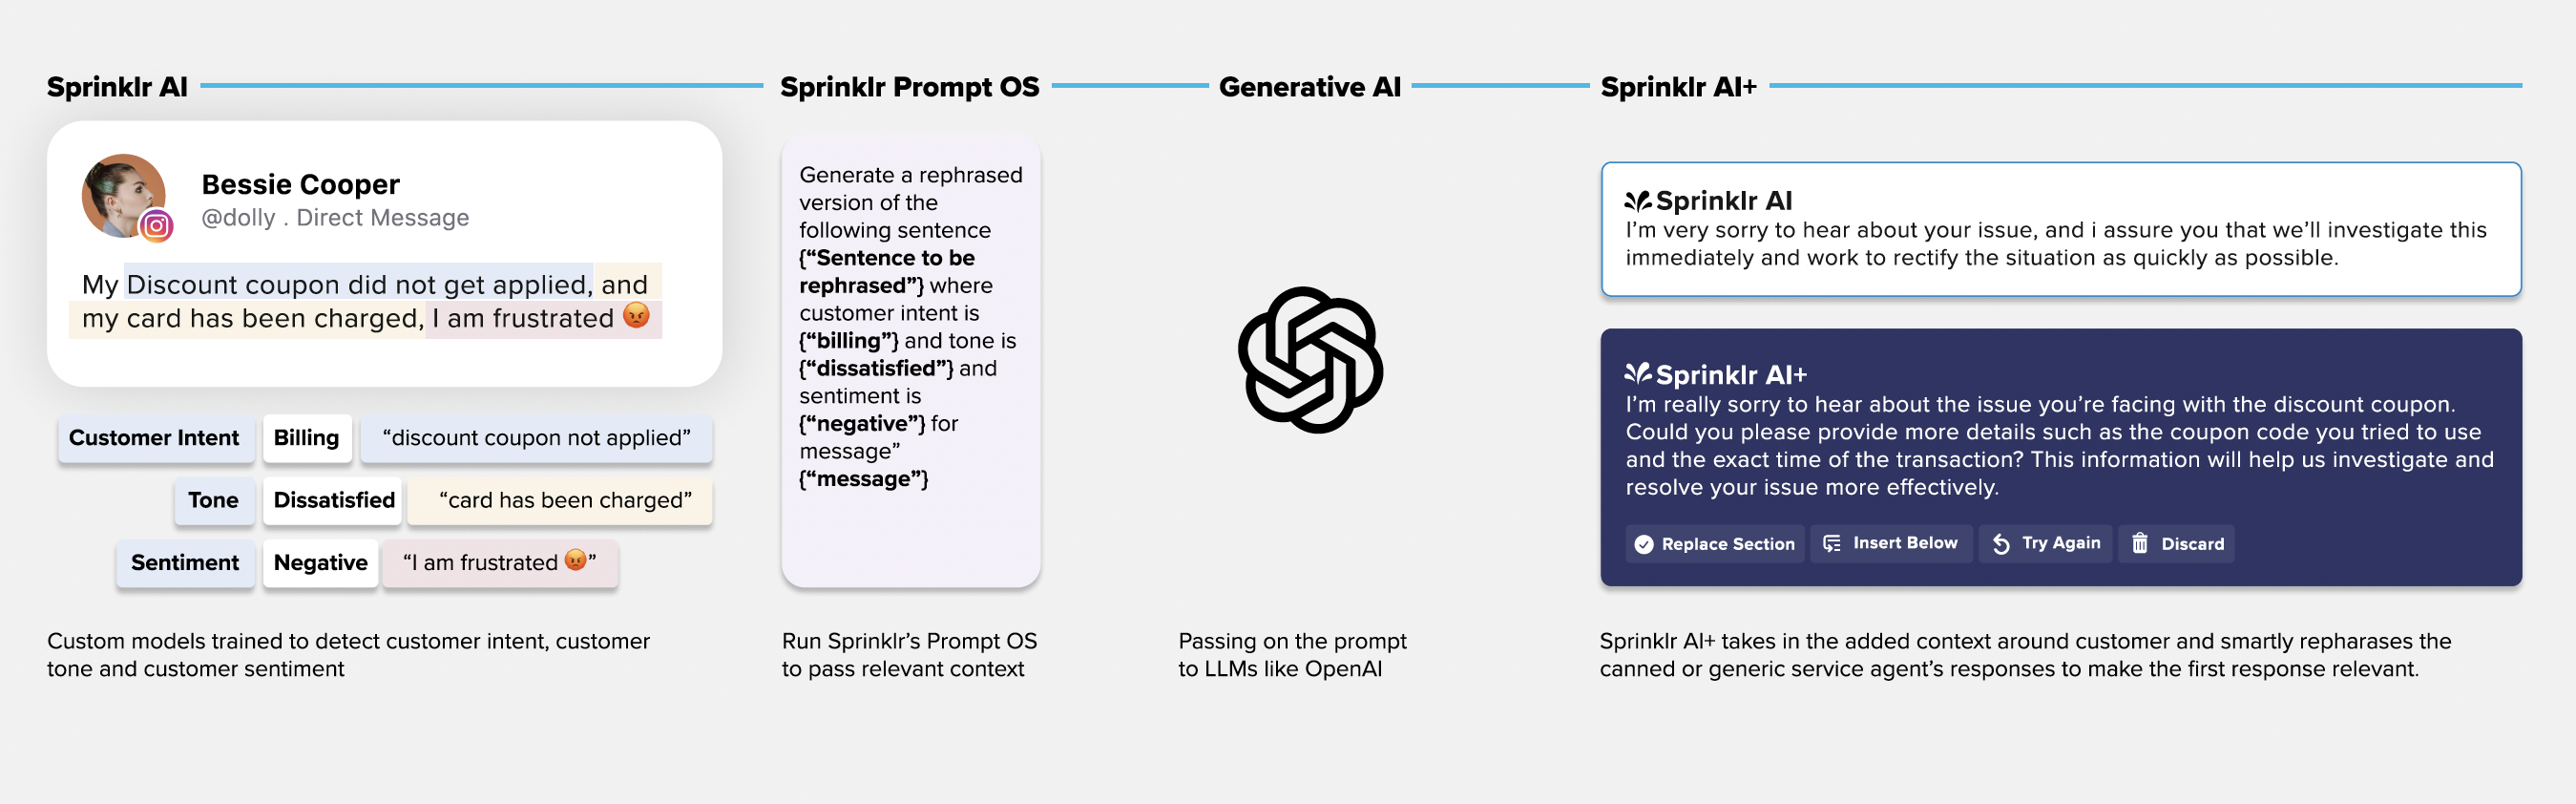 Sprinklr AI+ screenshot